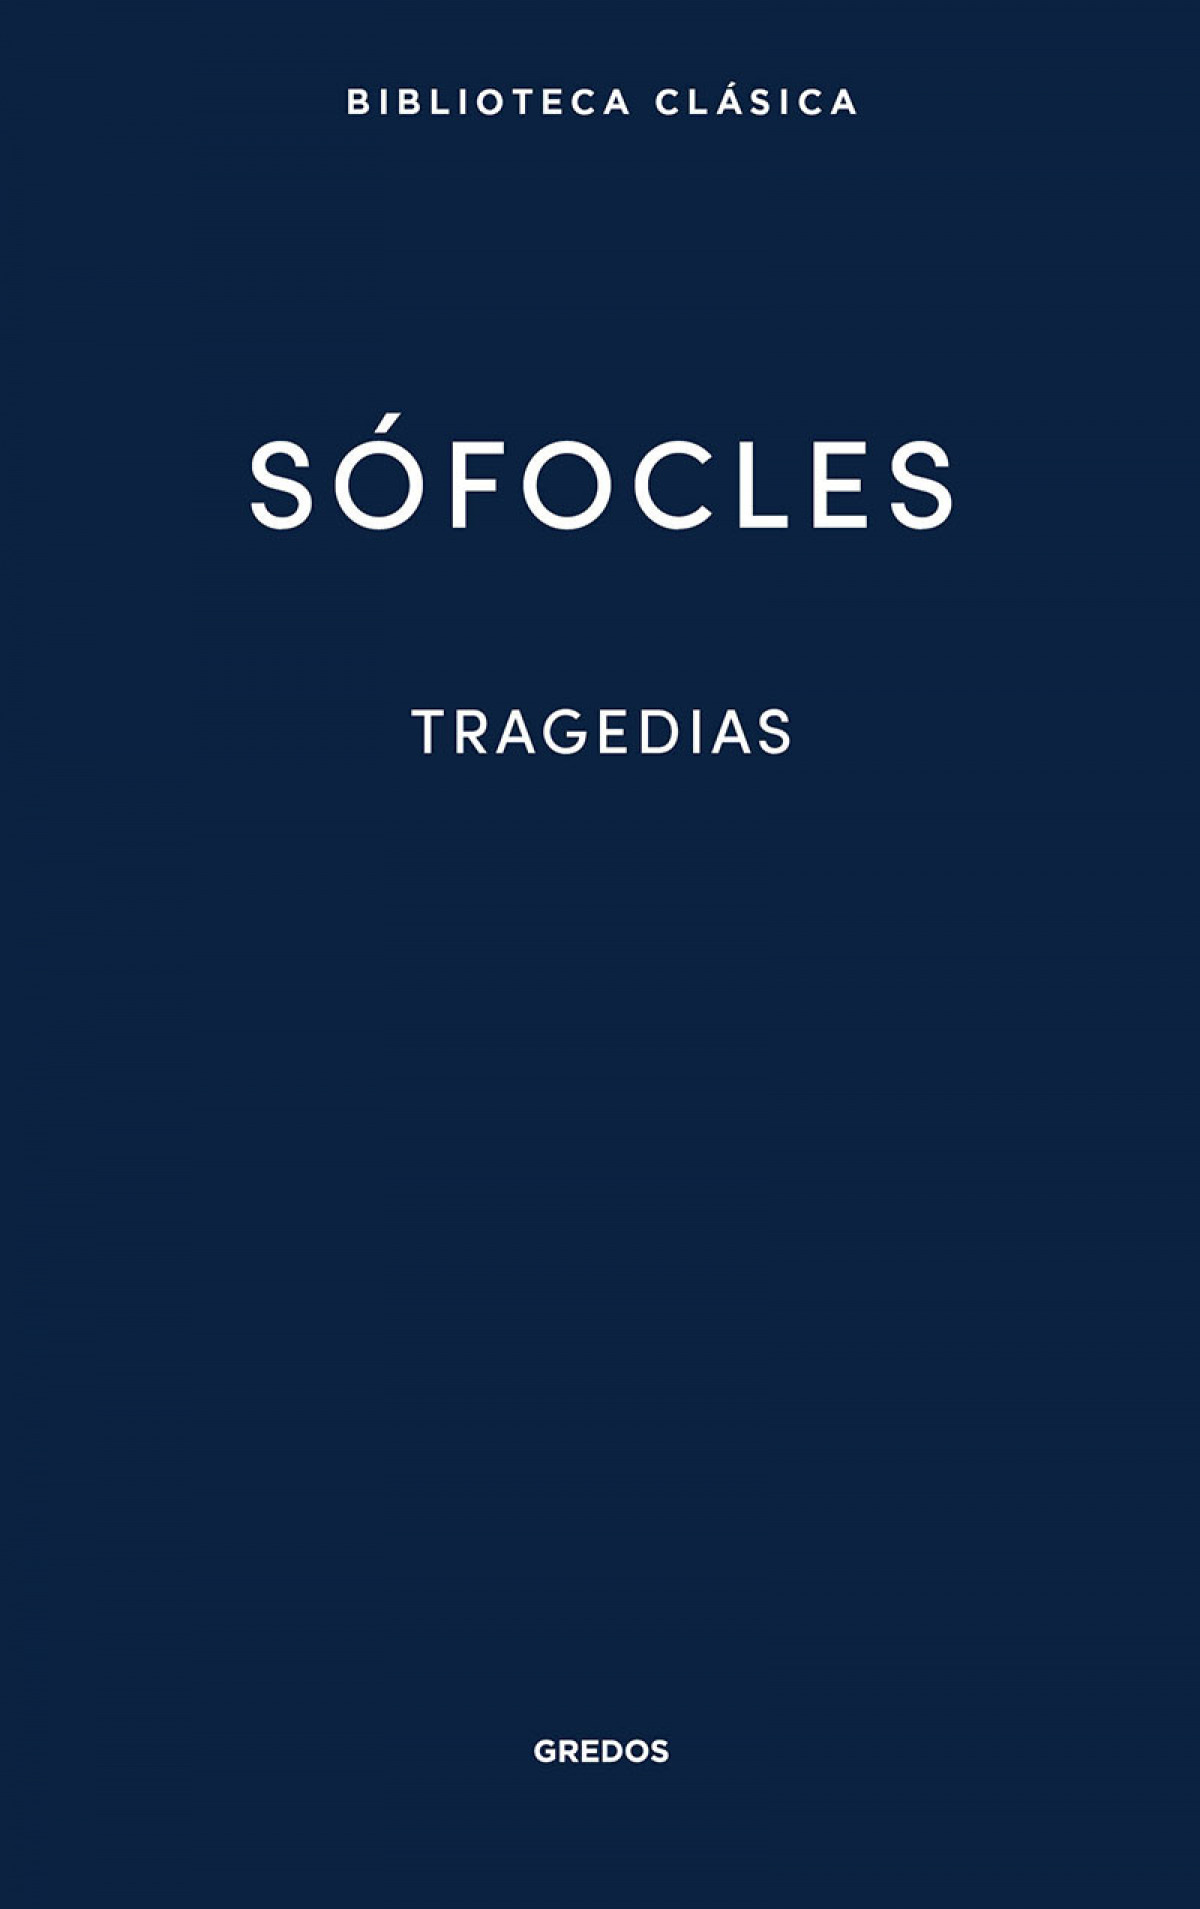 33. tragedias